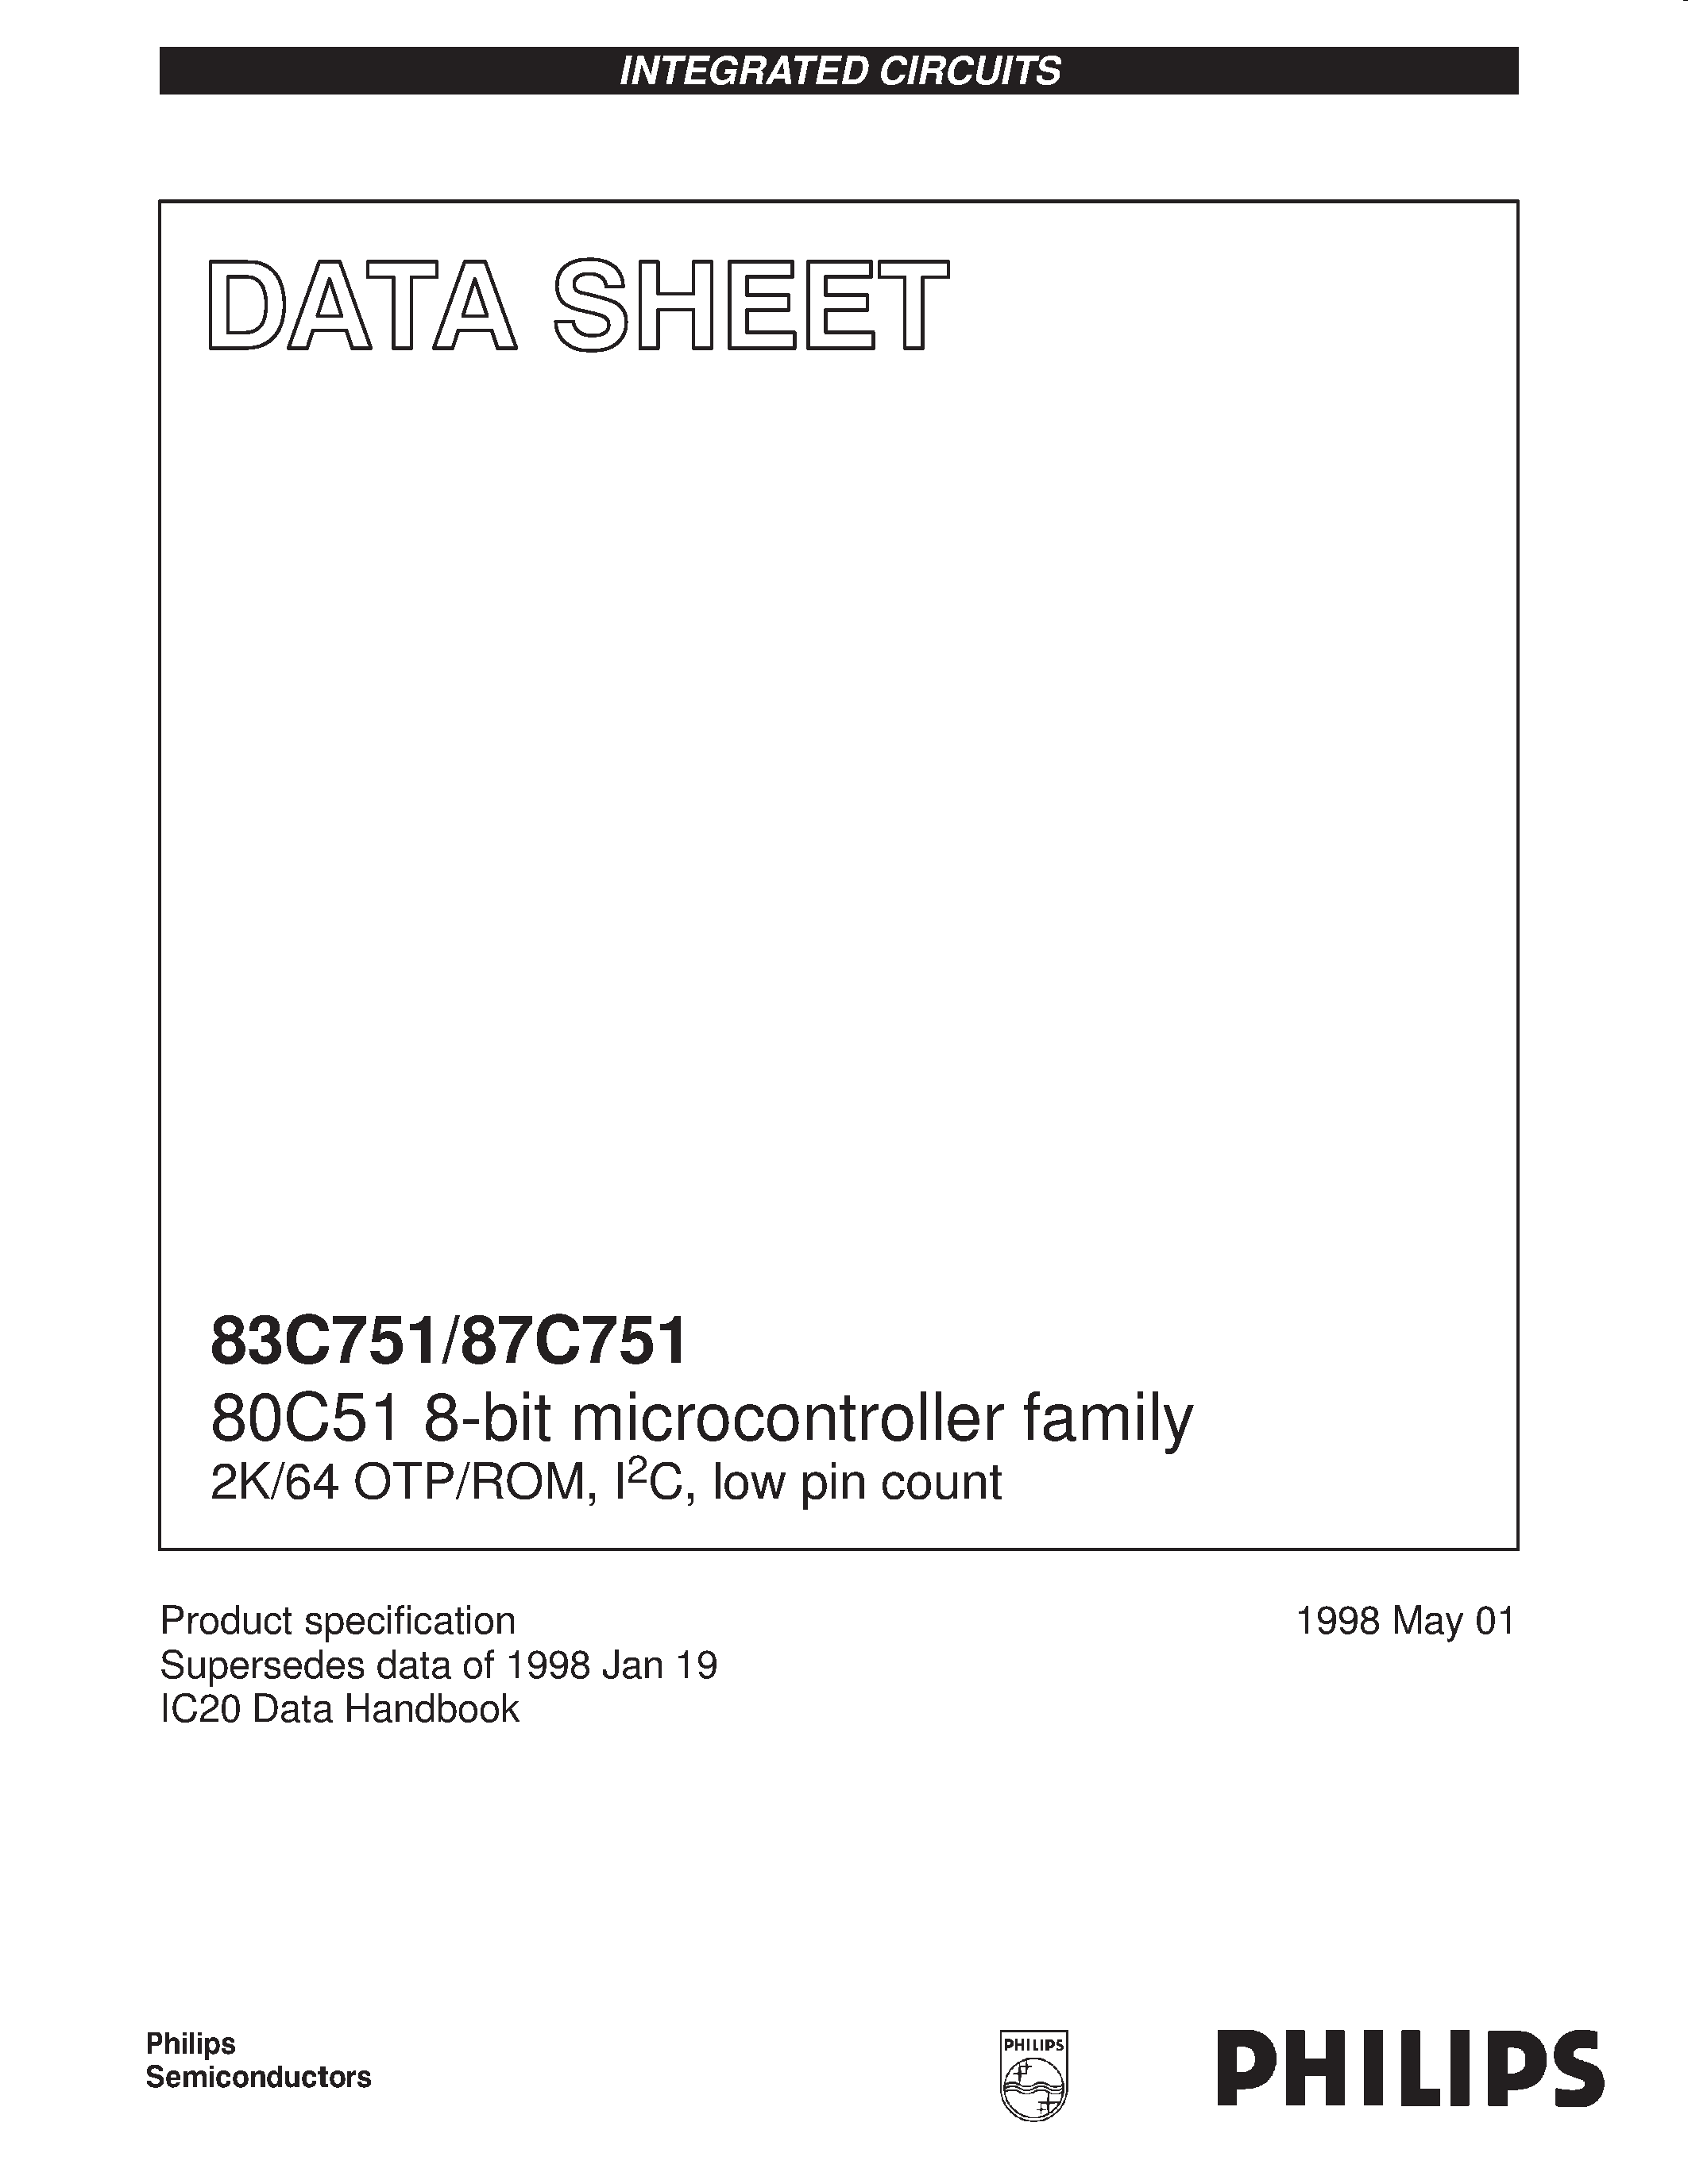 Даташит S87C751-2N24 - 80C51 8-bit microcontroller family 2K/64 OTP/ROM / I2C / low pin count страница 1